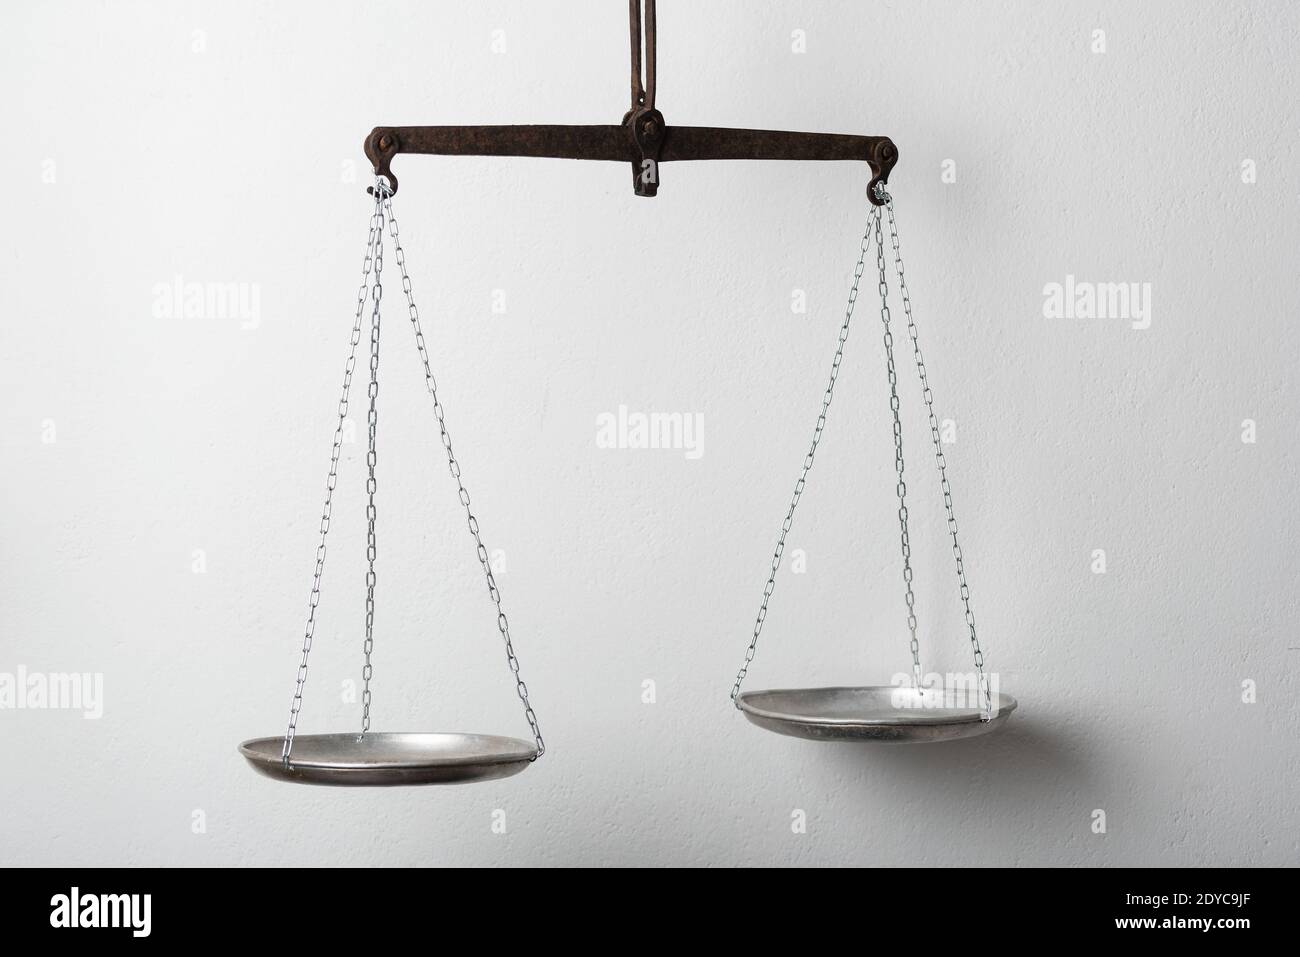 Silver balance scale or beam balance on white background. Laboratory scales  Stock Photo - Alamy